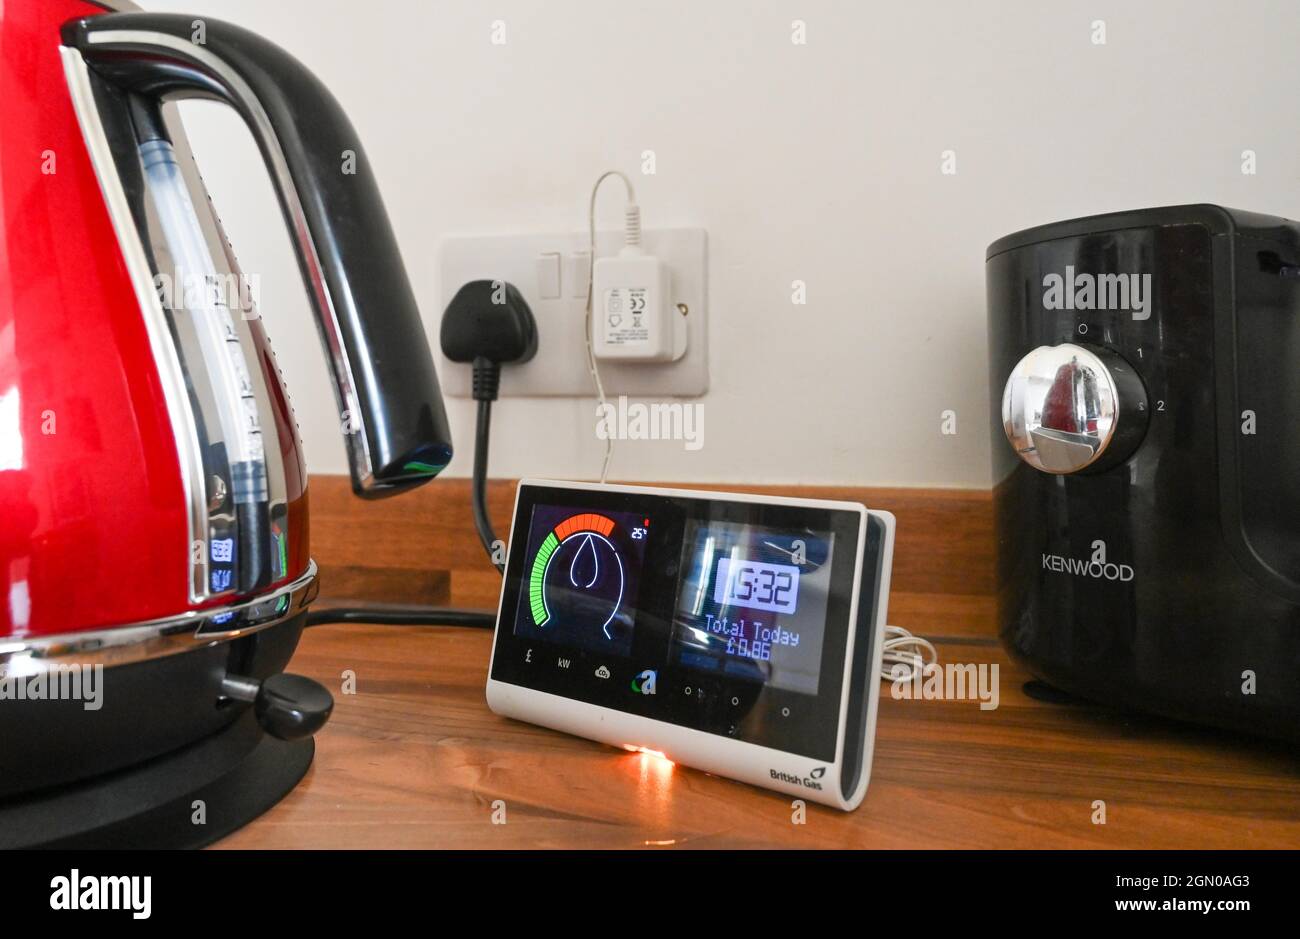 British gas Smart Meter in cucina britannica insieme a un bollitore elettrico Foto Stock